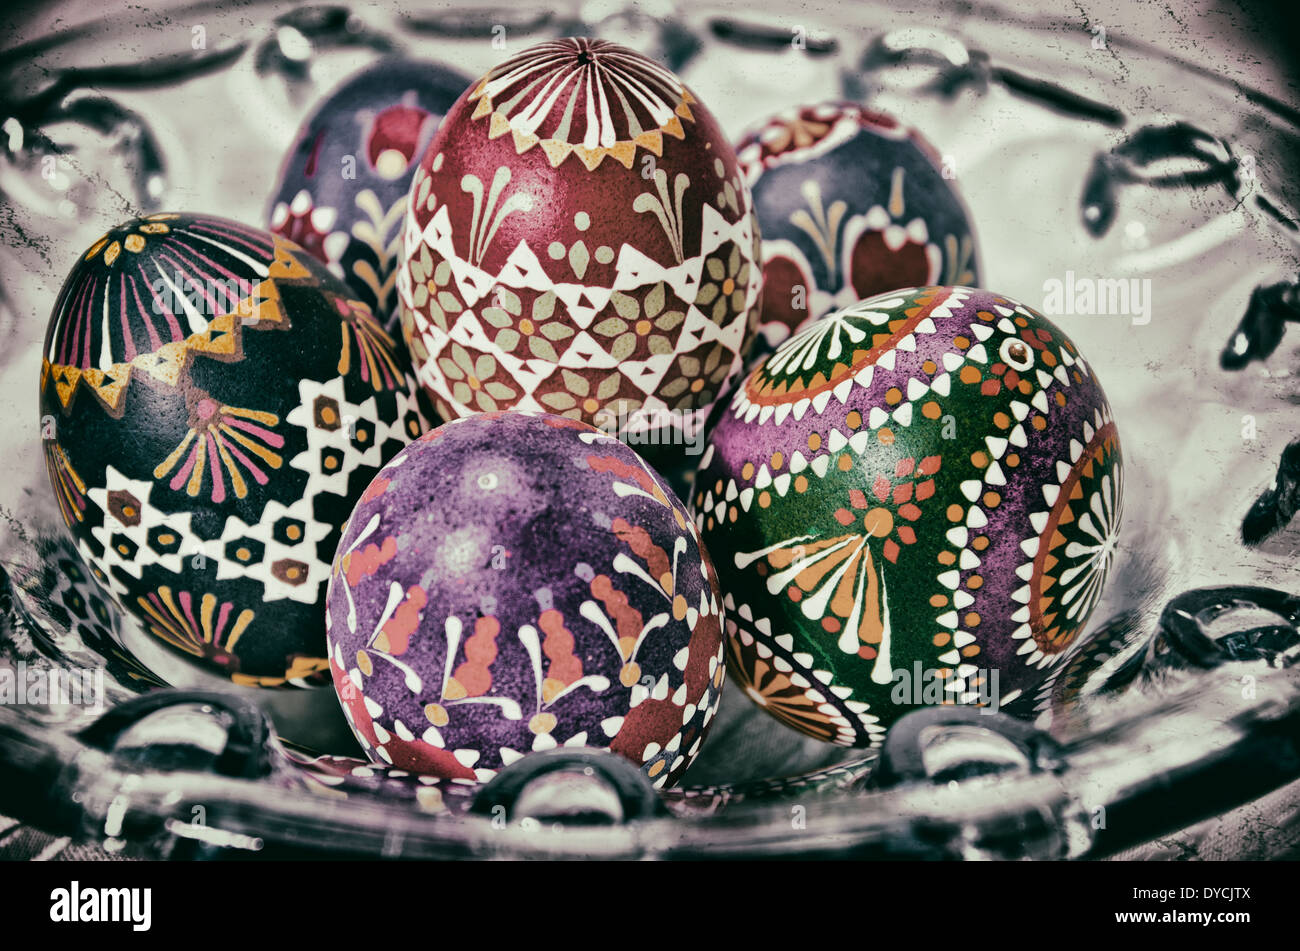 Les oeufs de Pâques colorés dans un bol de verre. Banque D'Images